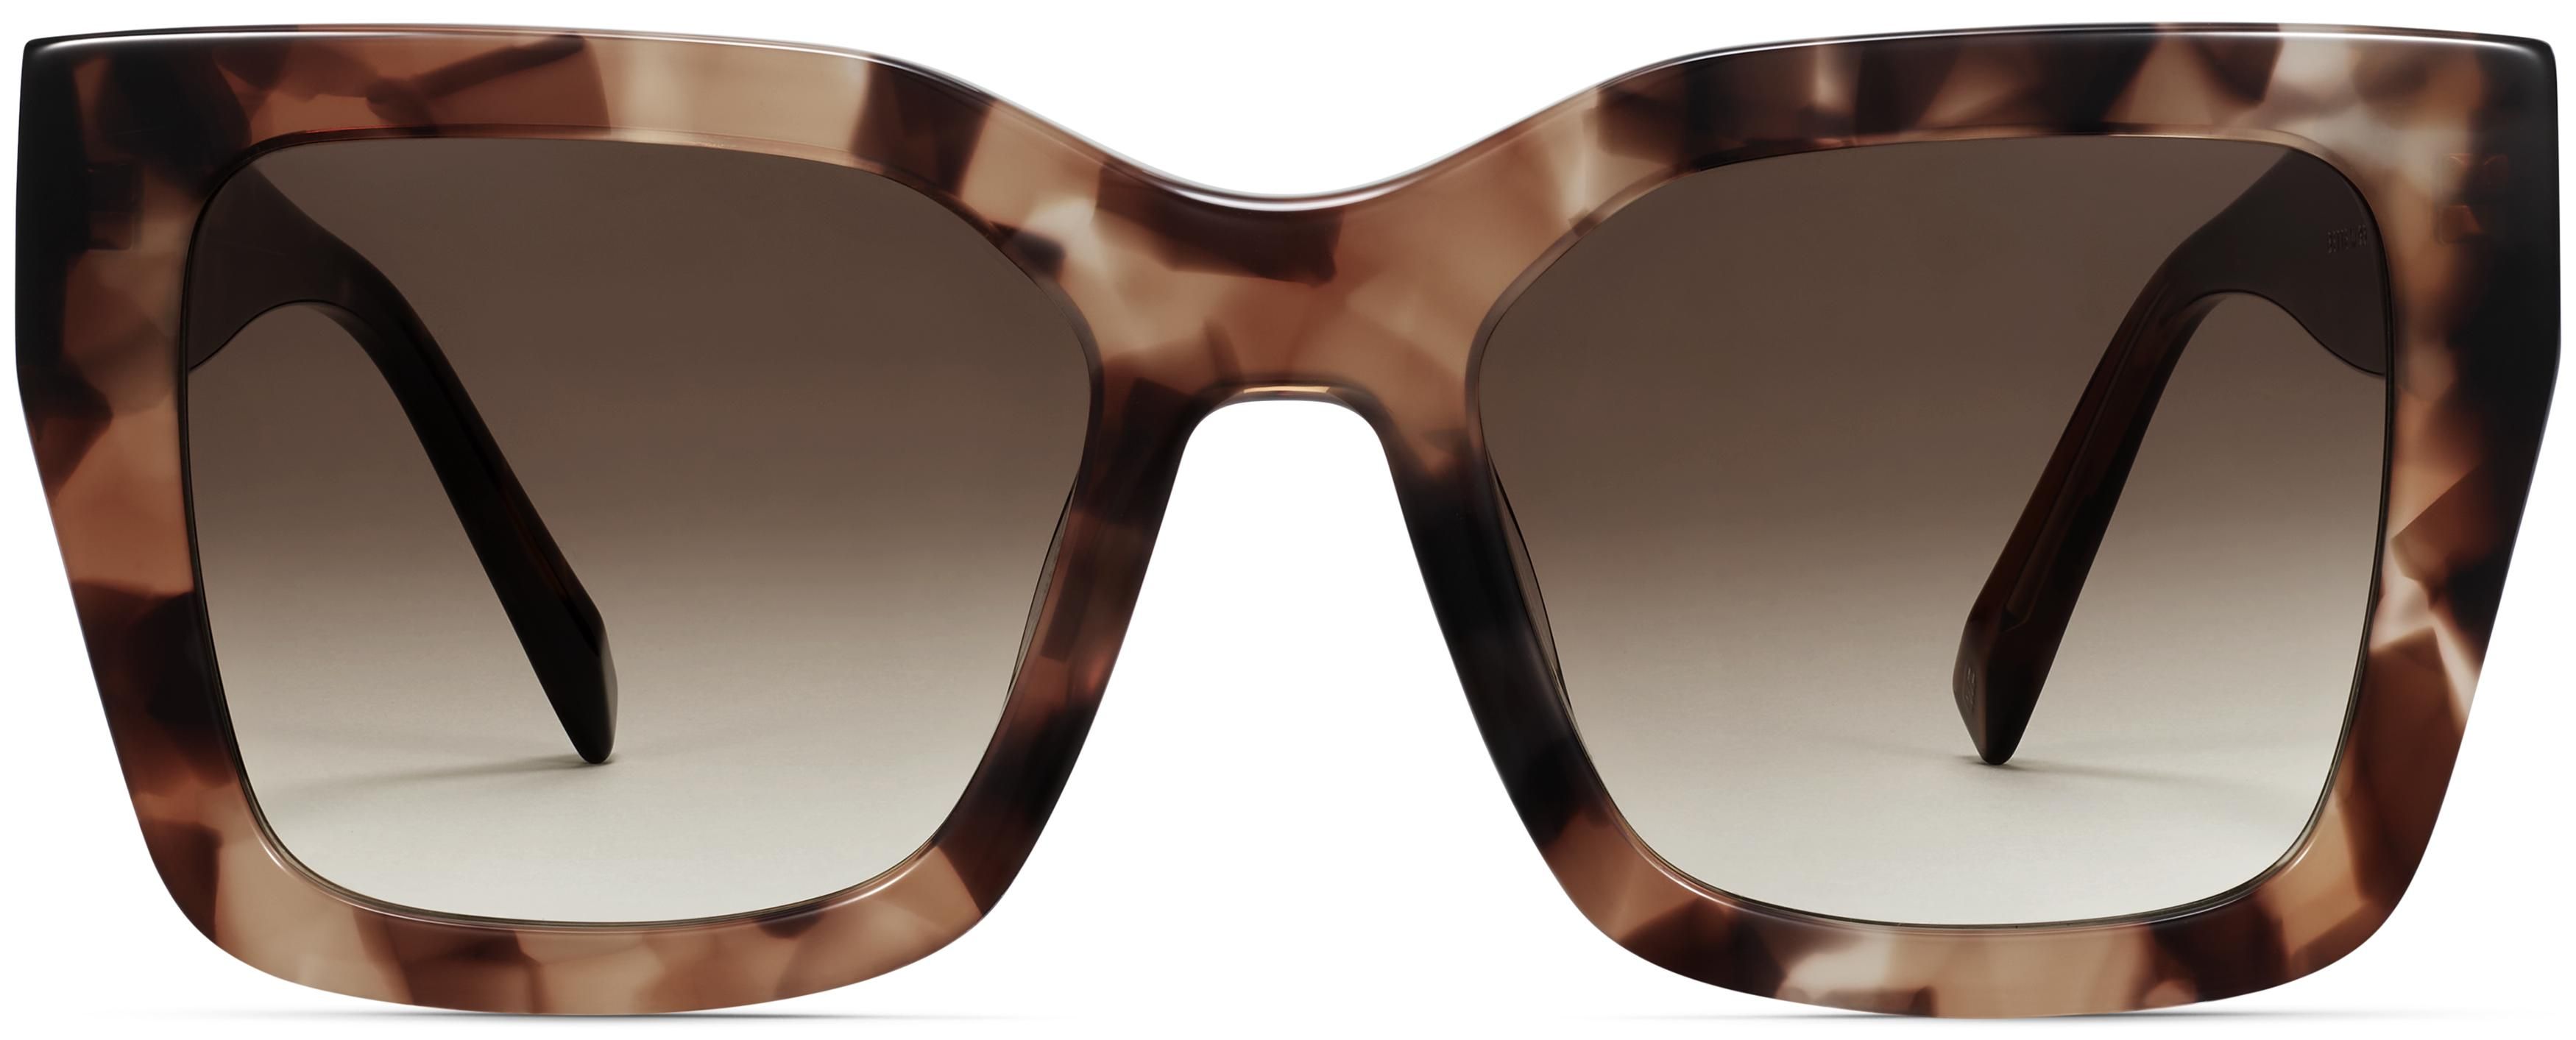 Bette Sunglasses in Sesame Tortoise | Warby Parker | Warby Parker (US)